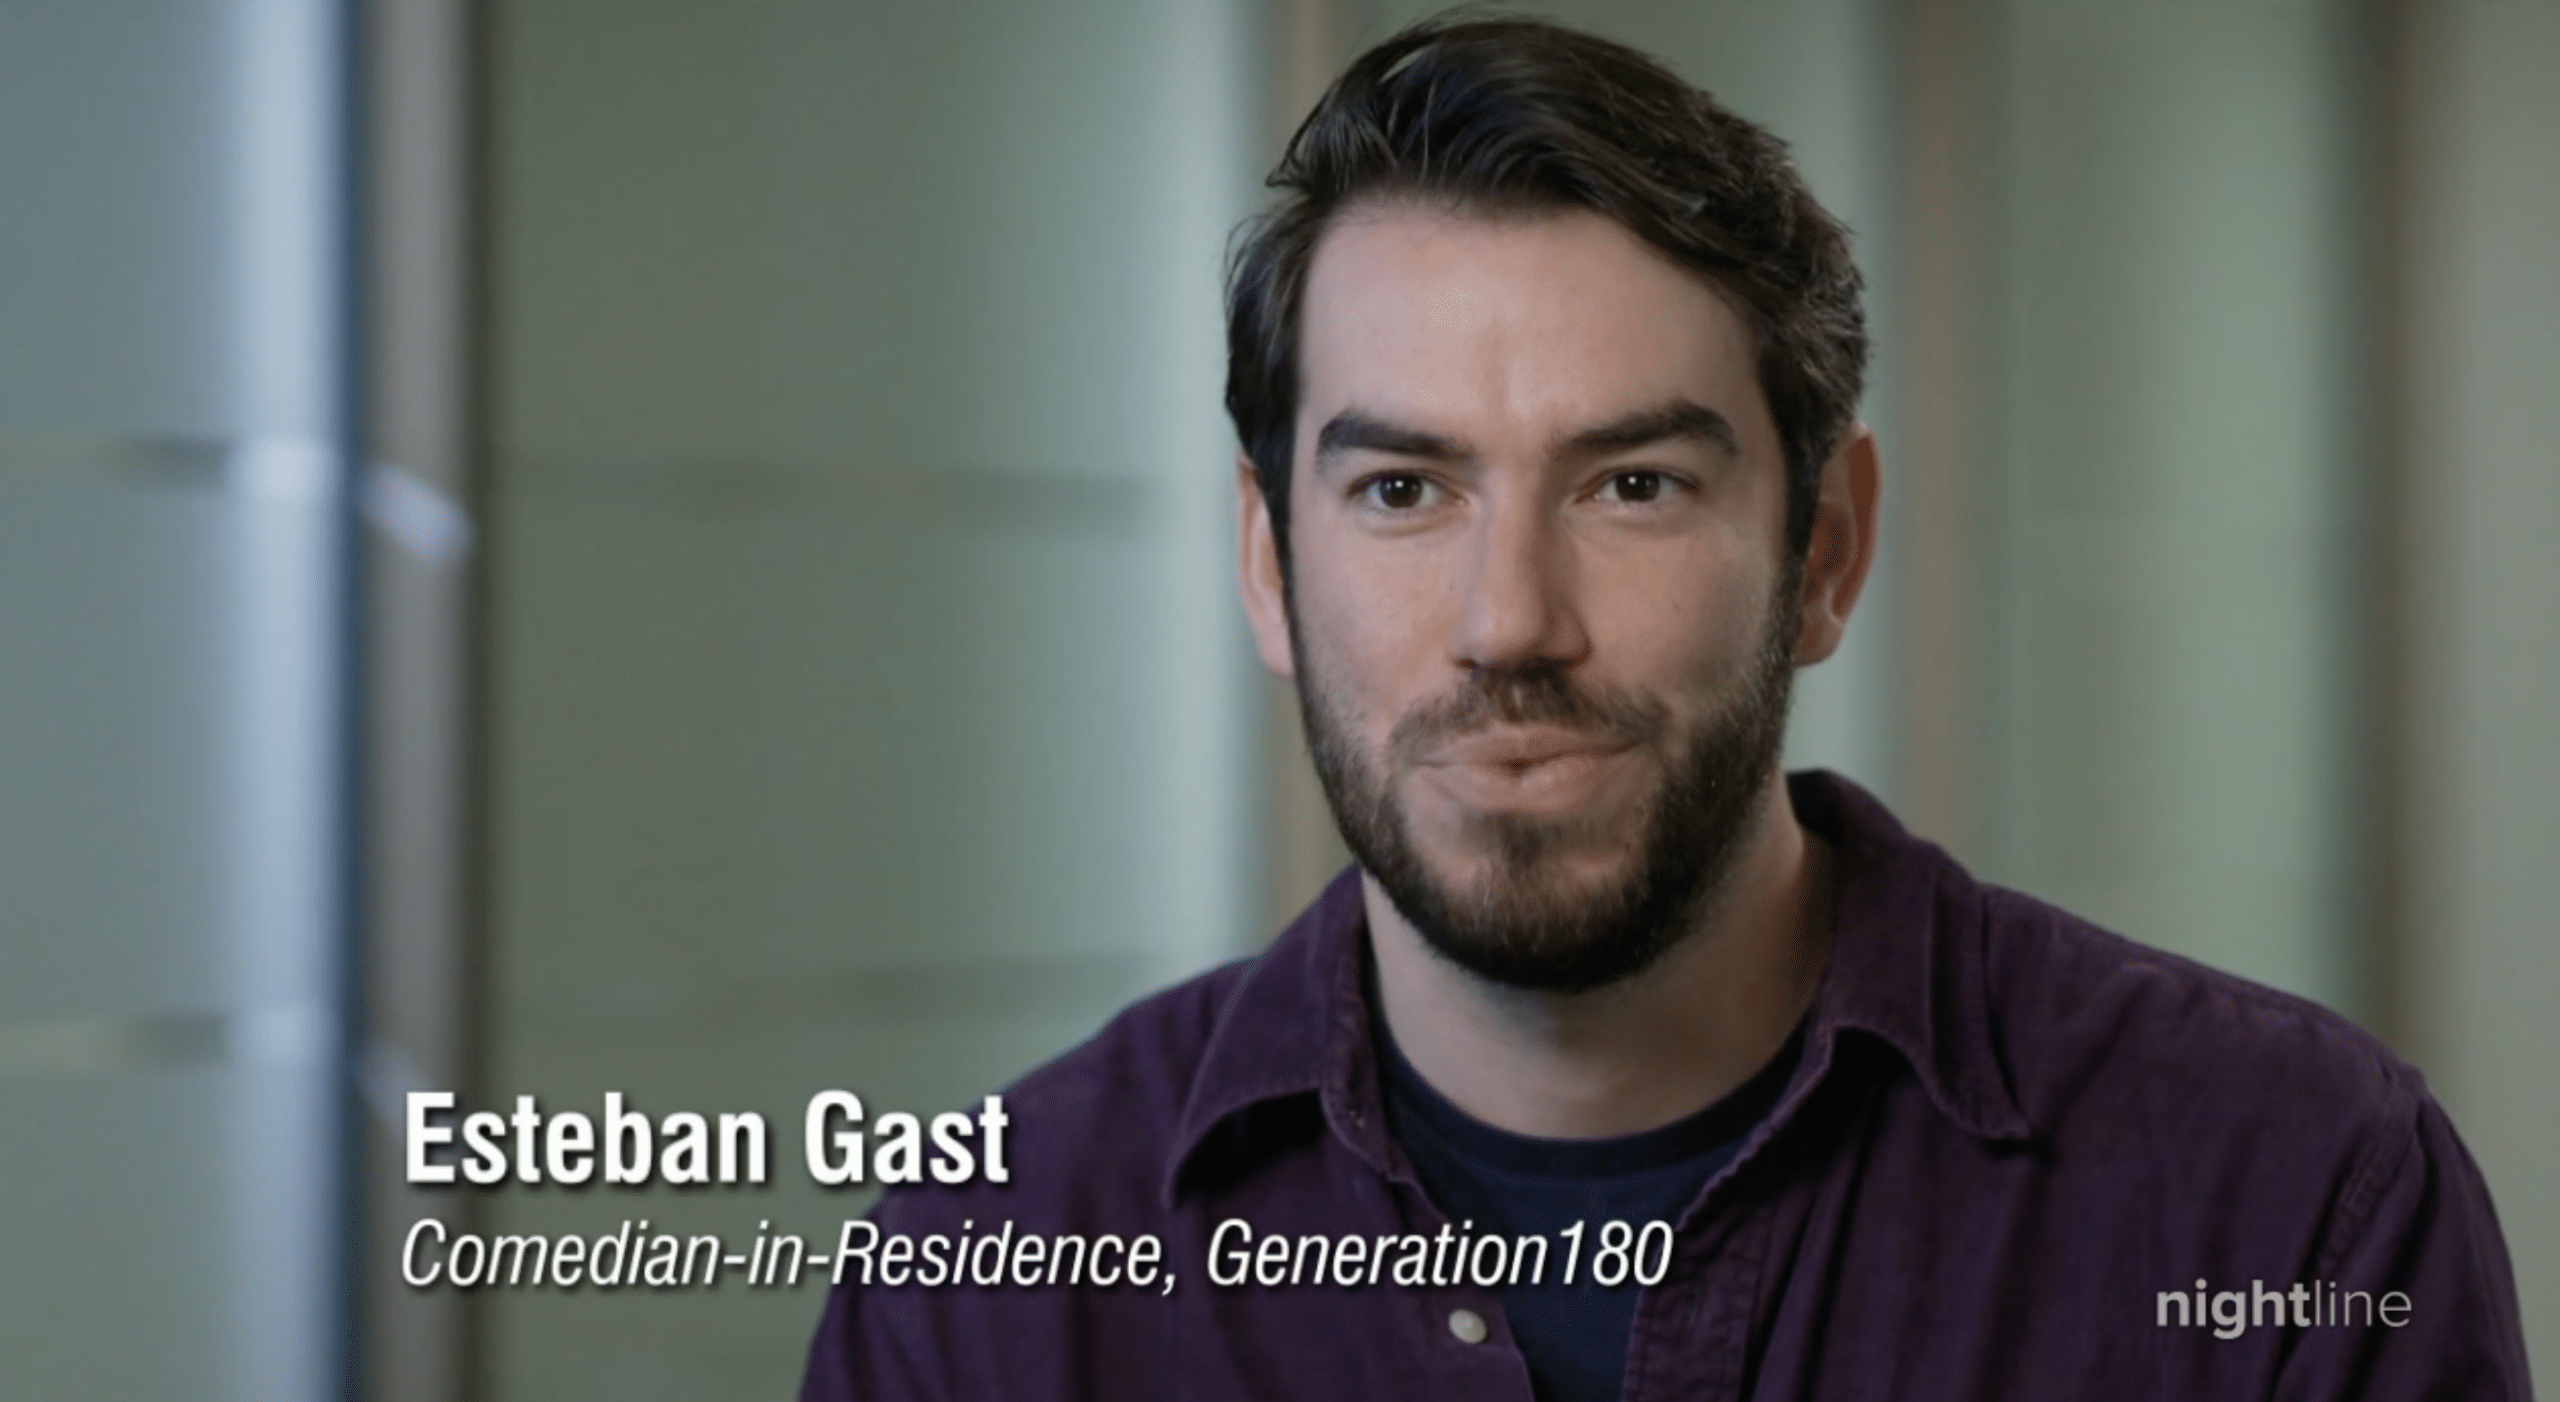 Esteban Gast on ABC News